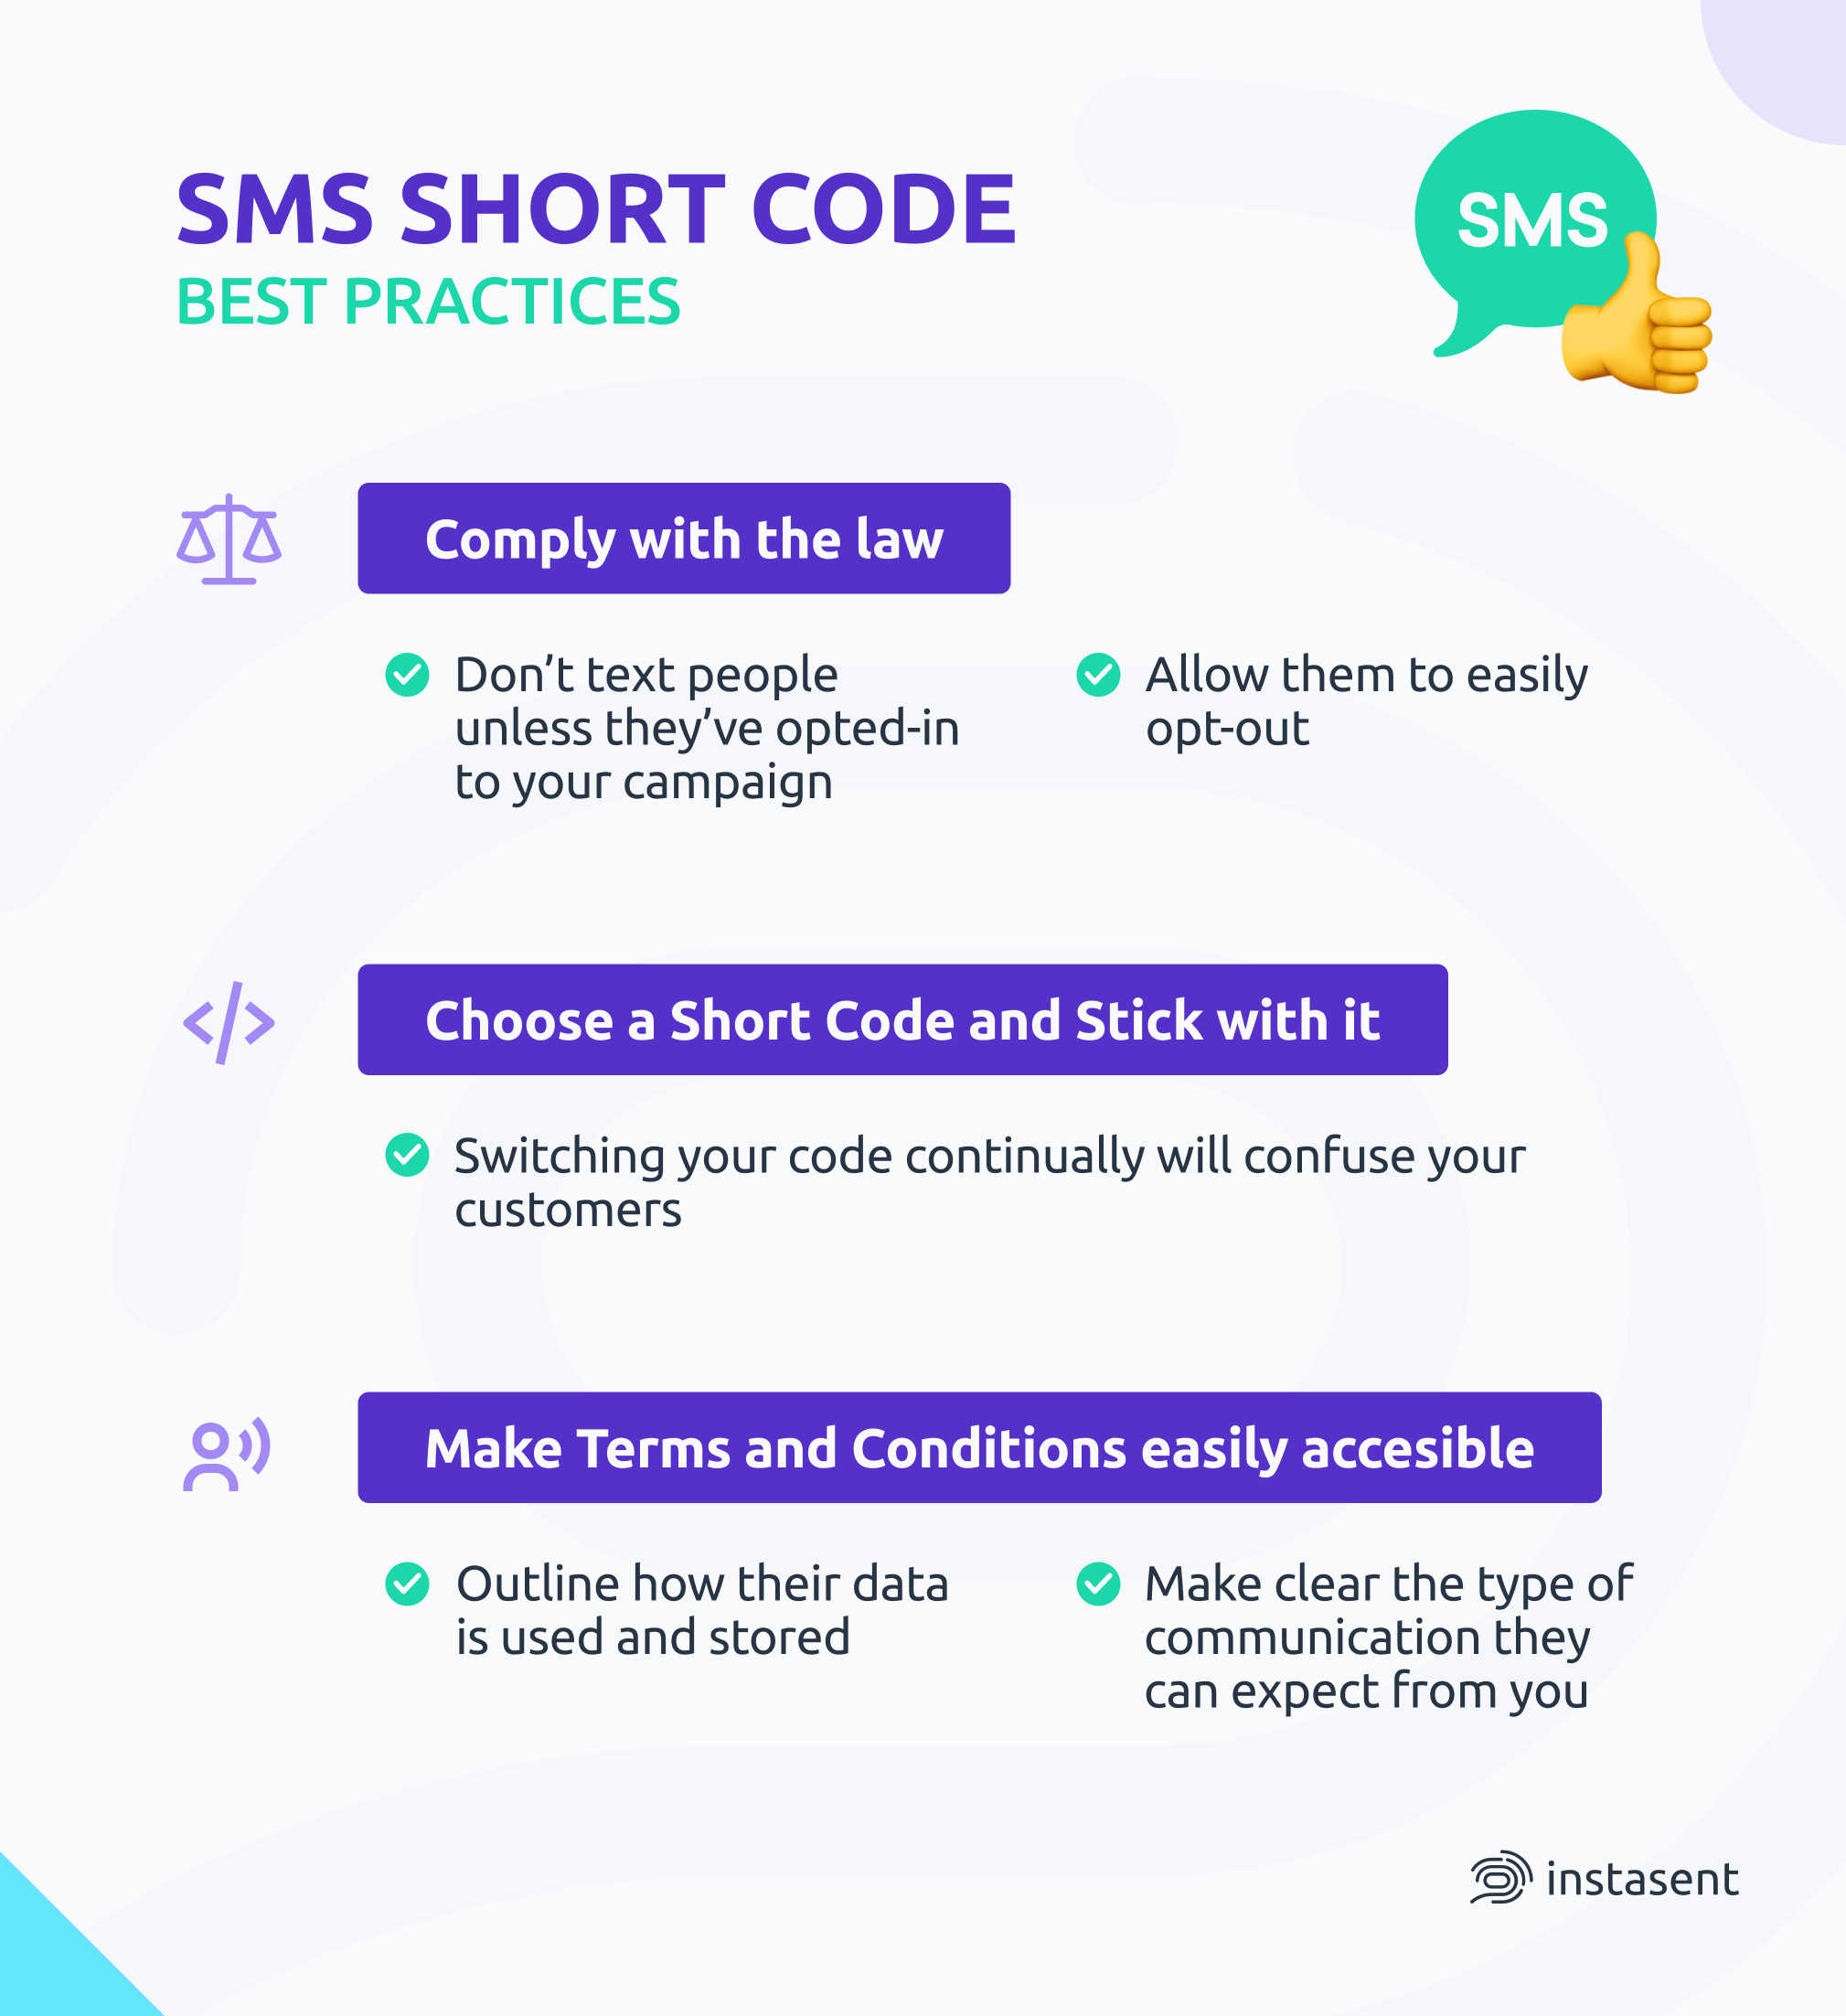 SMS short code Best Practices